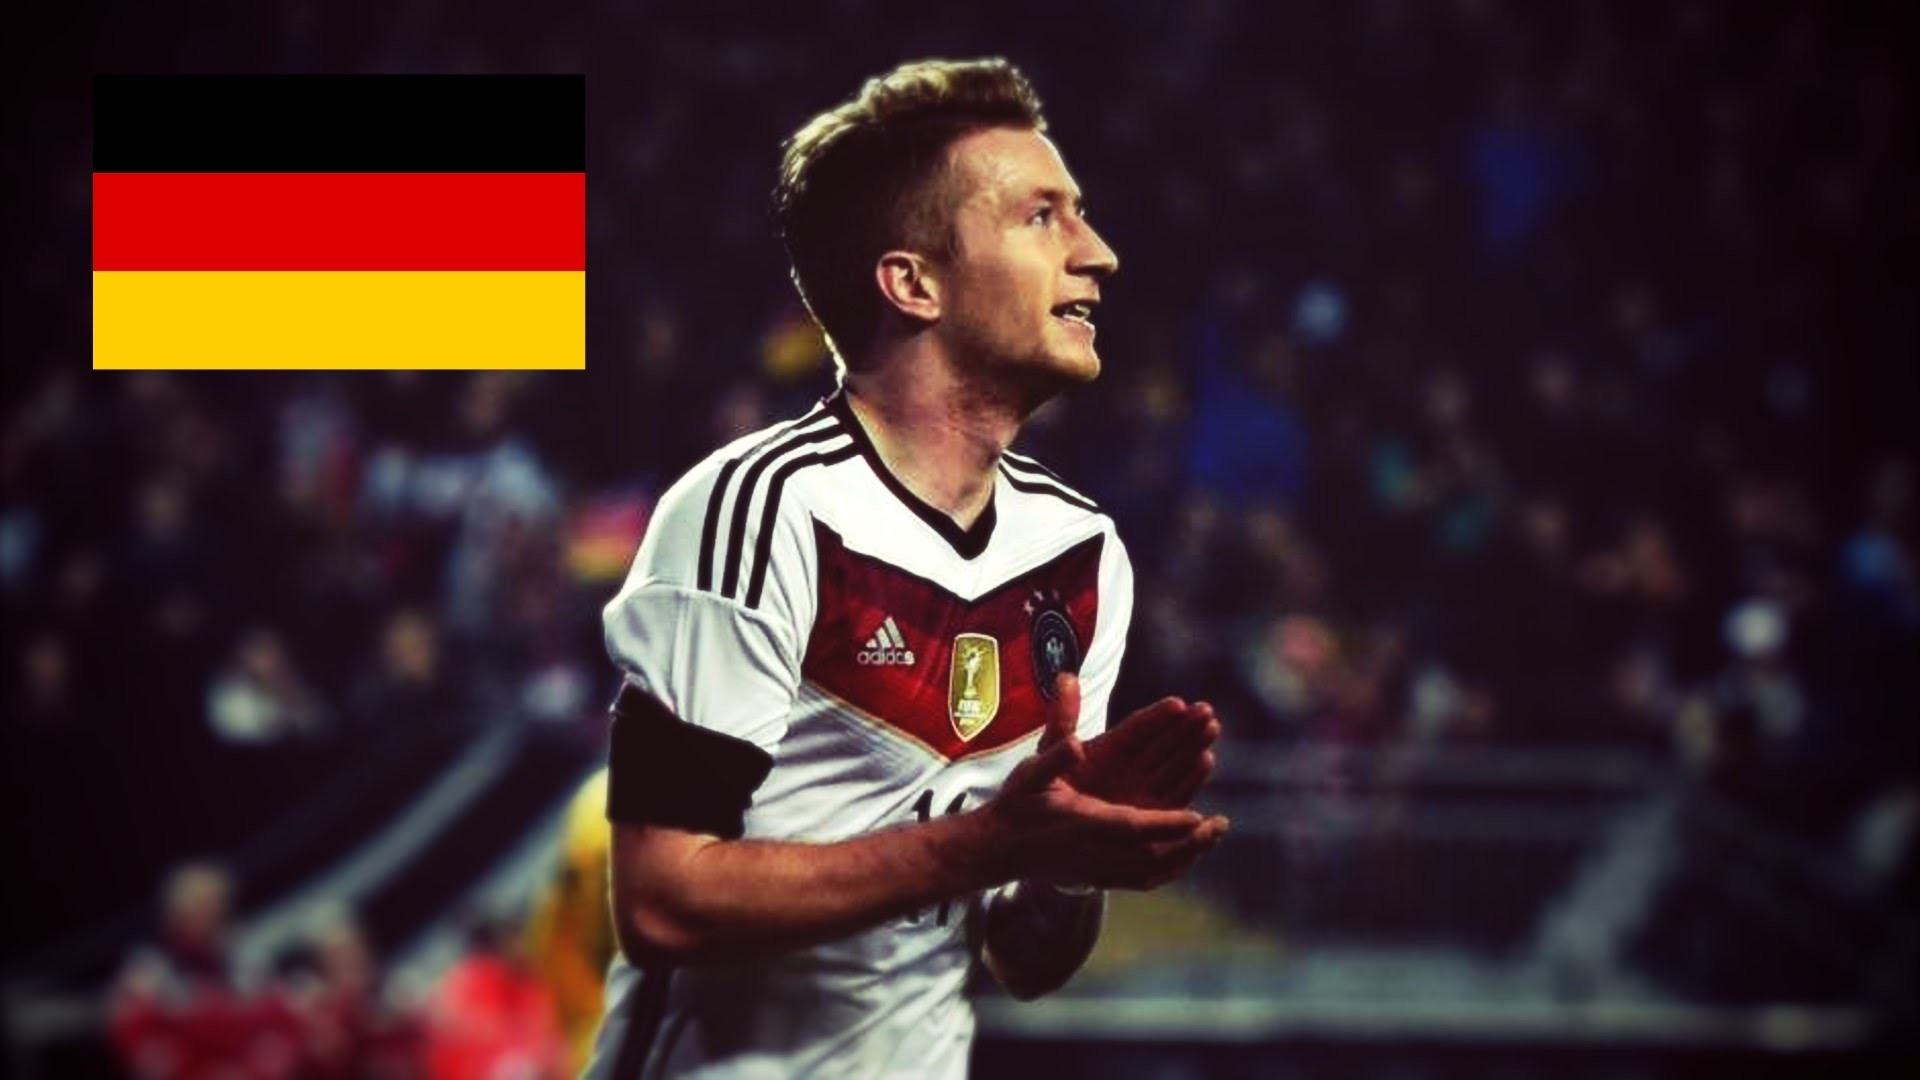 1920x1080 Marco Reus â Best Goals & Dribbling Skills Ever â Germany || HD - YouTube